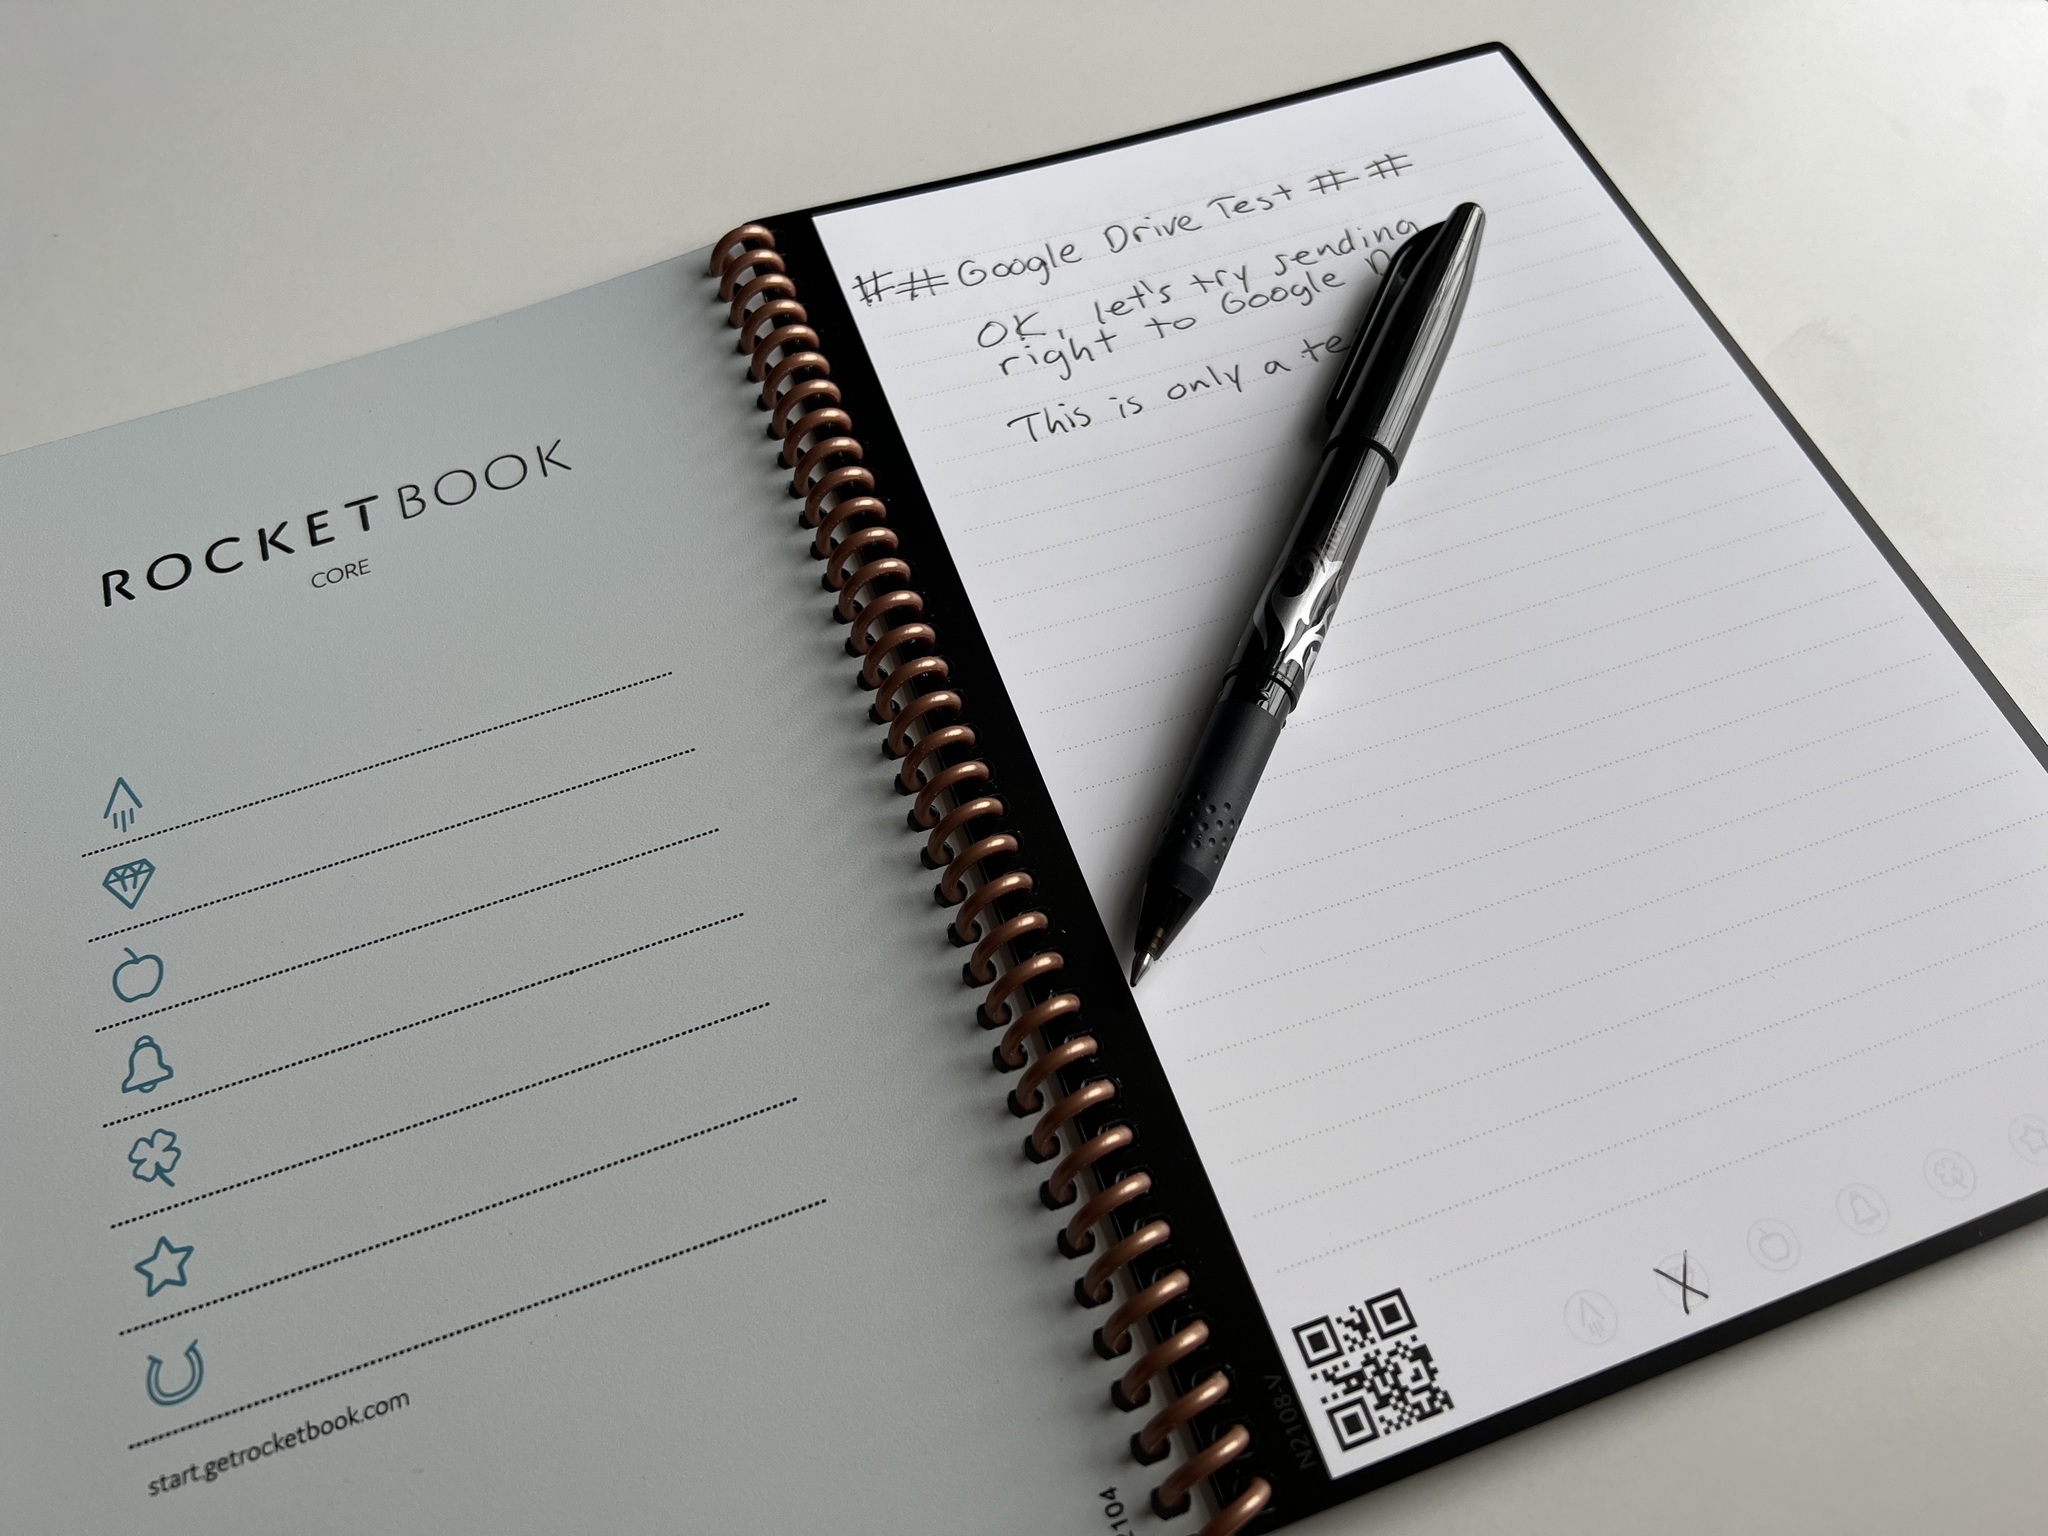 Rocketbook Core Smart Notebook Lifestyle Google Drive Test